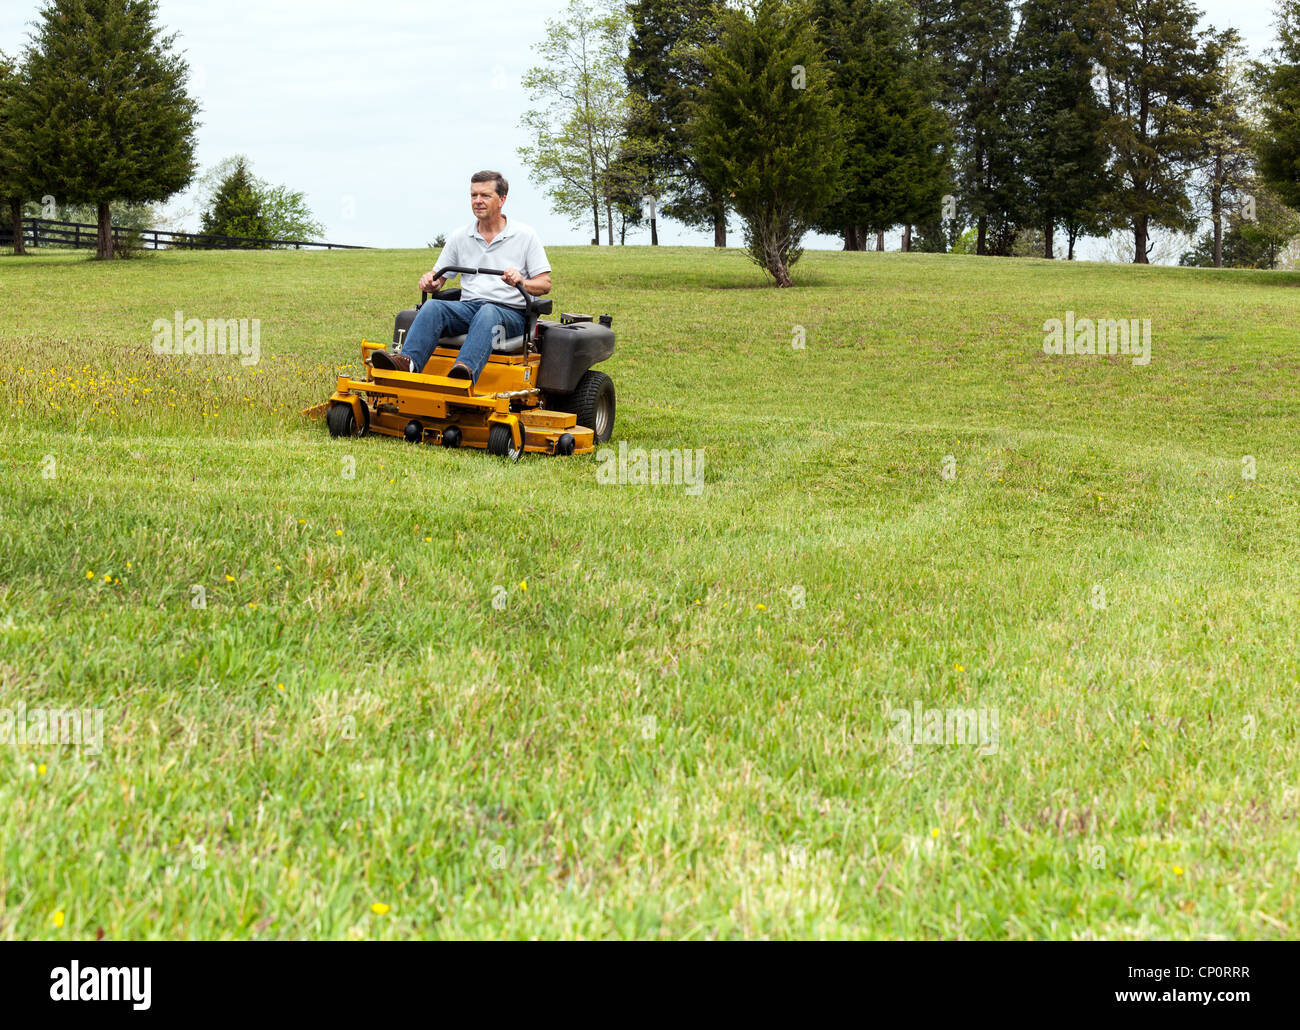 Senior retired male cutting the grass on expansive lawn using yellow zero-turn mower Stock Photo